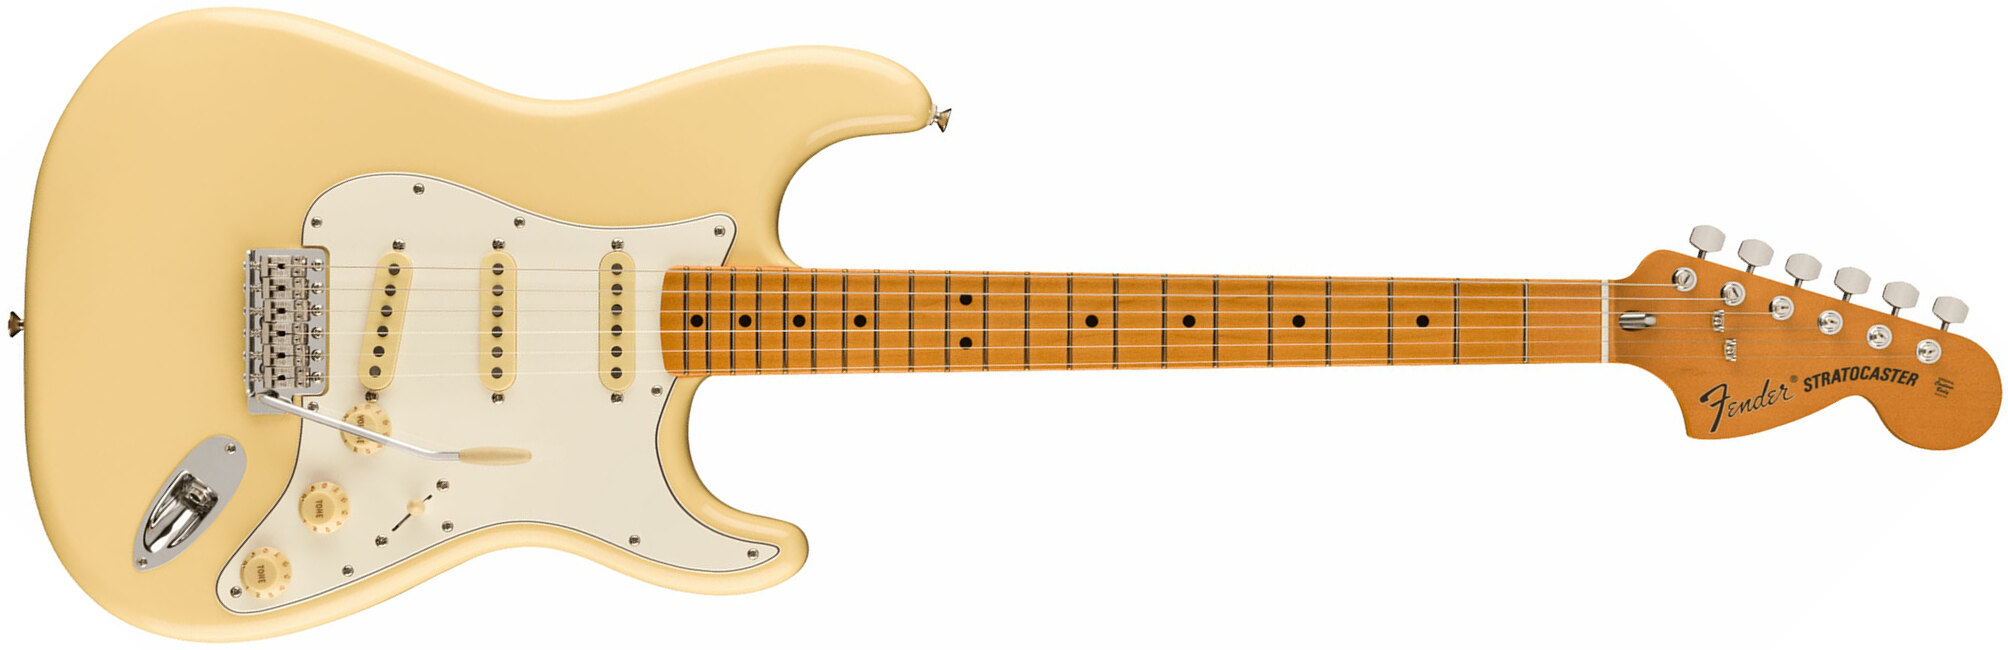 Fender Strat 70s Vintera 2 Mex 3s Trem Mn - Vintage White - Str shape electric guitar - Main picture